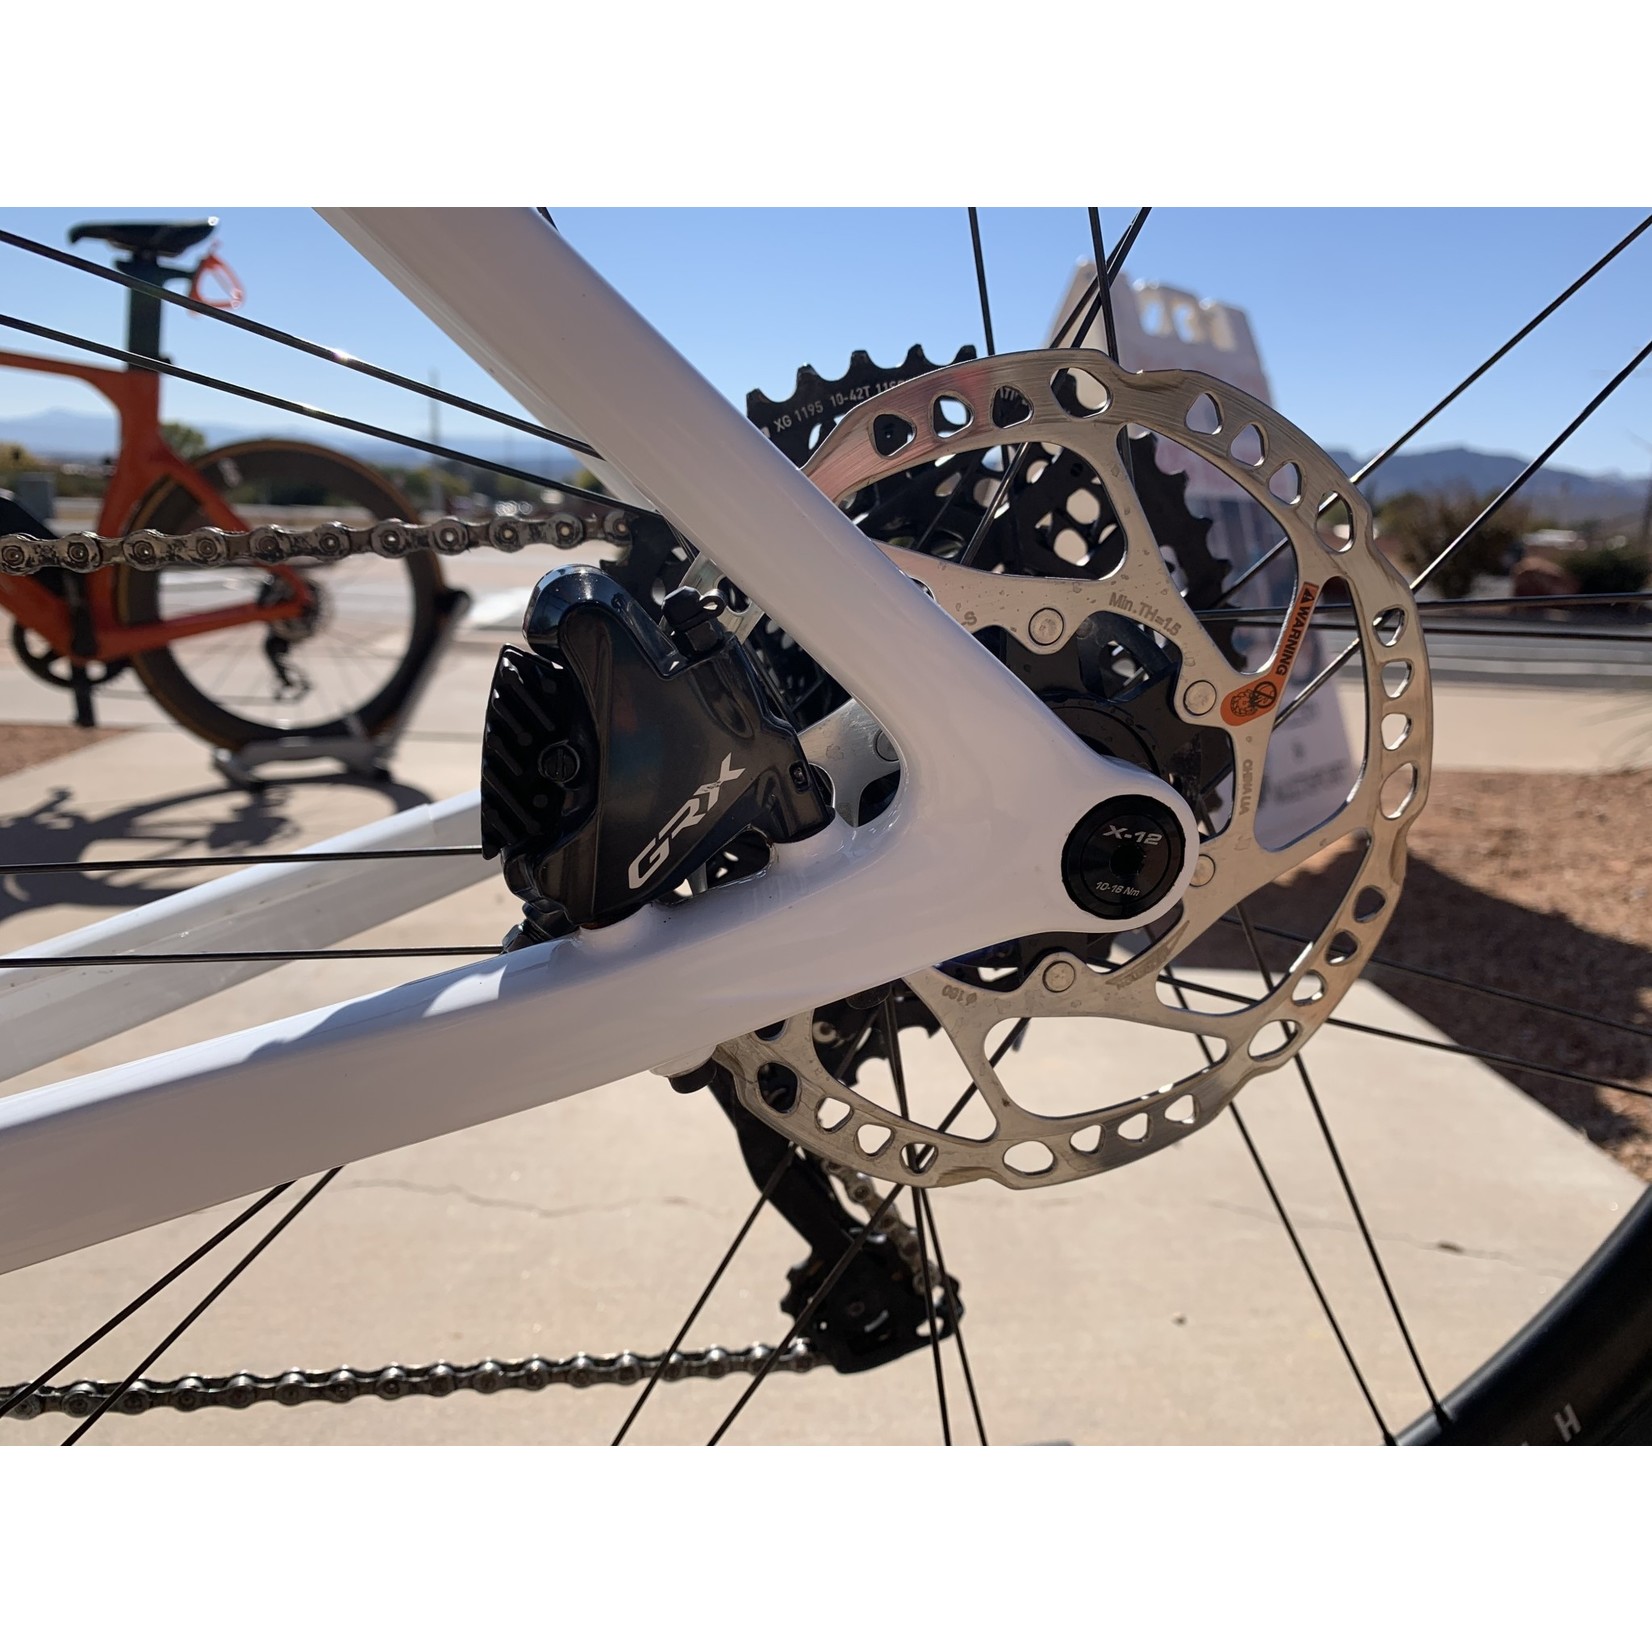 3T Exploro RaceMax GRX 1x11 - Rolf Carbon 650B - Rotor INPower - Enve bar/stem - 51cm